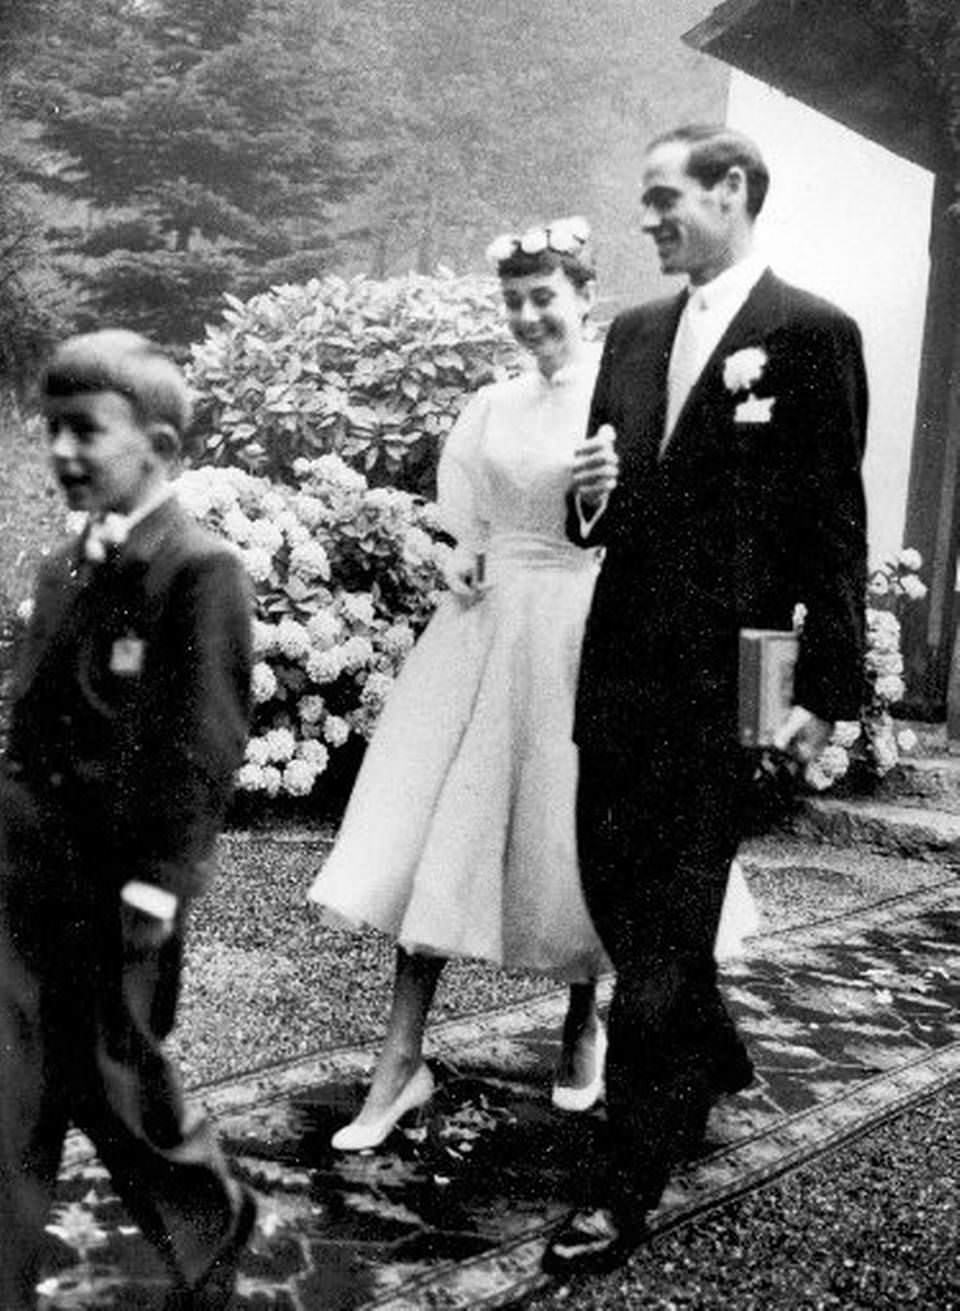 Audrey Hepburn and Mel Ferrer on Their Wedding Day and Honeymoon in Bürgenstock, Switzerland, 1954